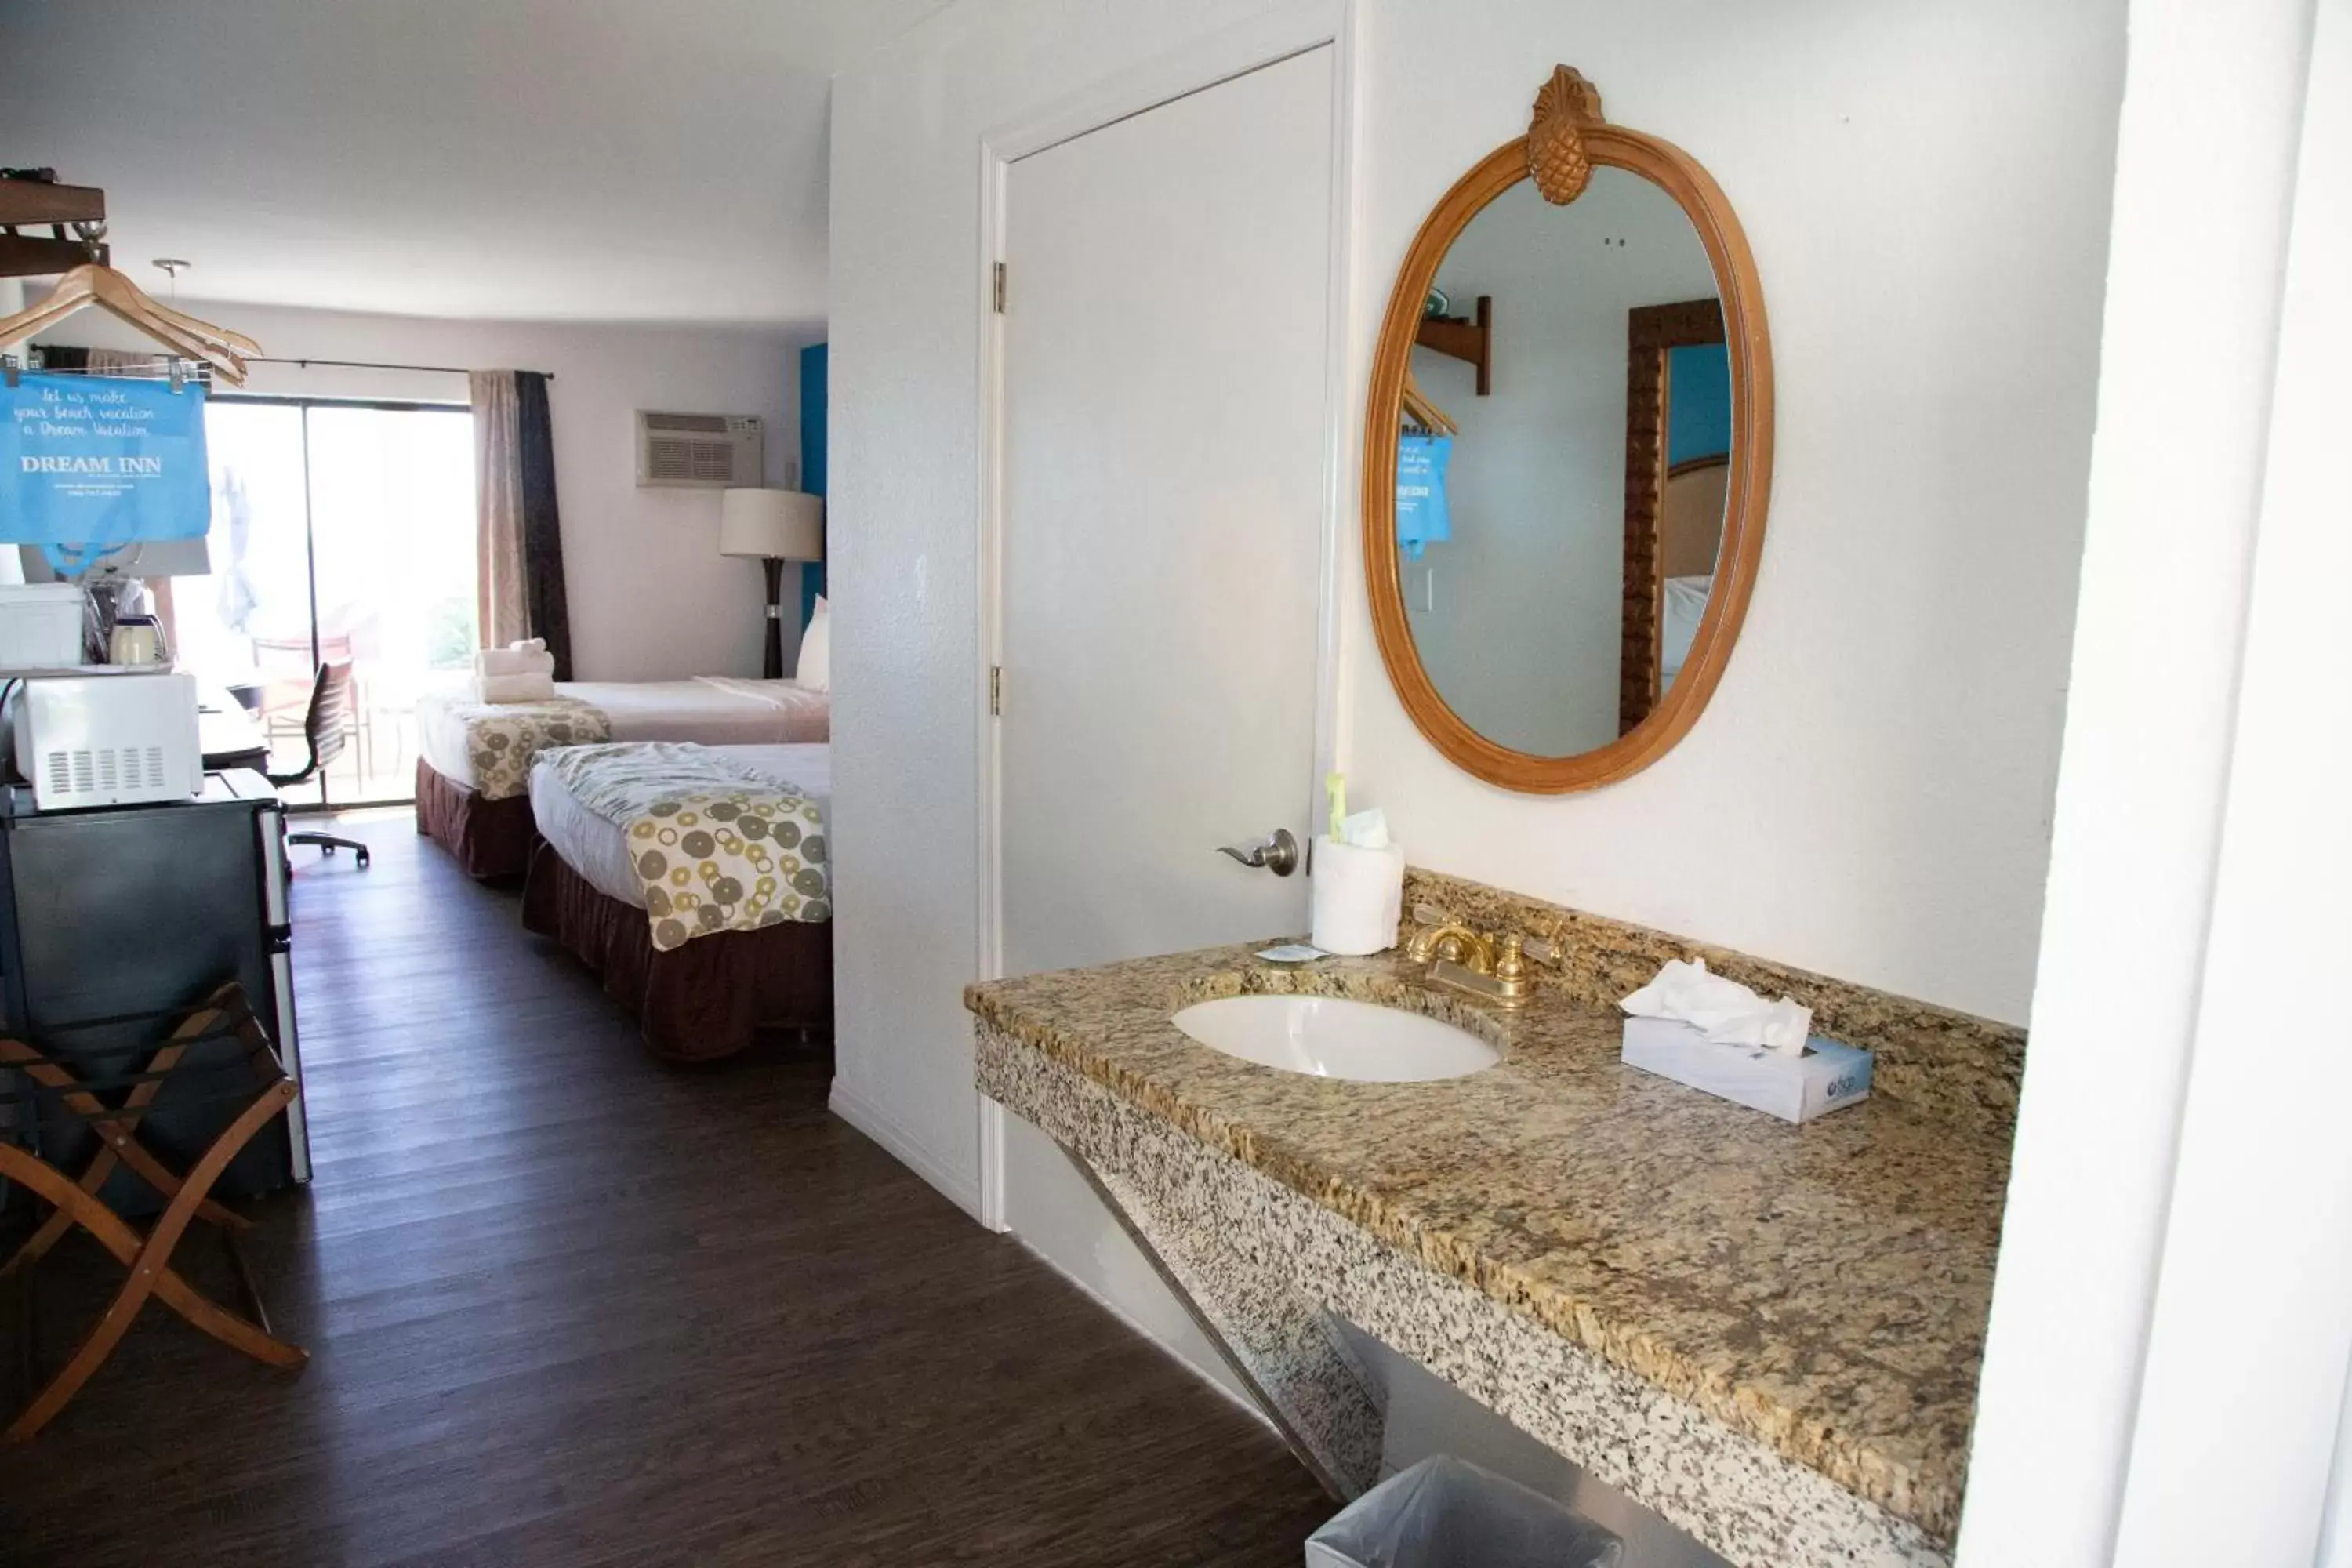 Photo of the whole room, Bathroom in Daytona Dream Inn By AmeriVu